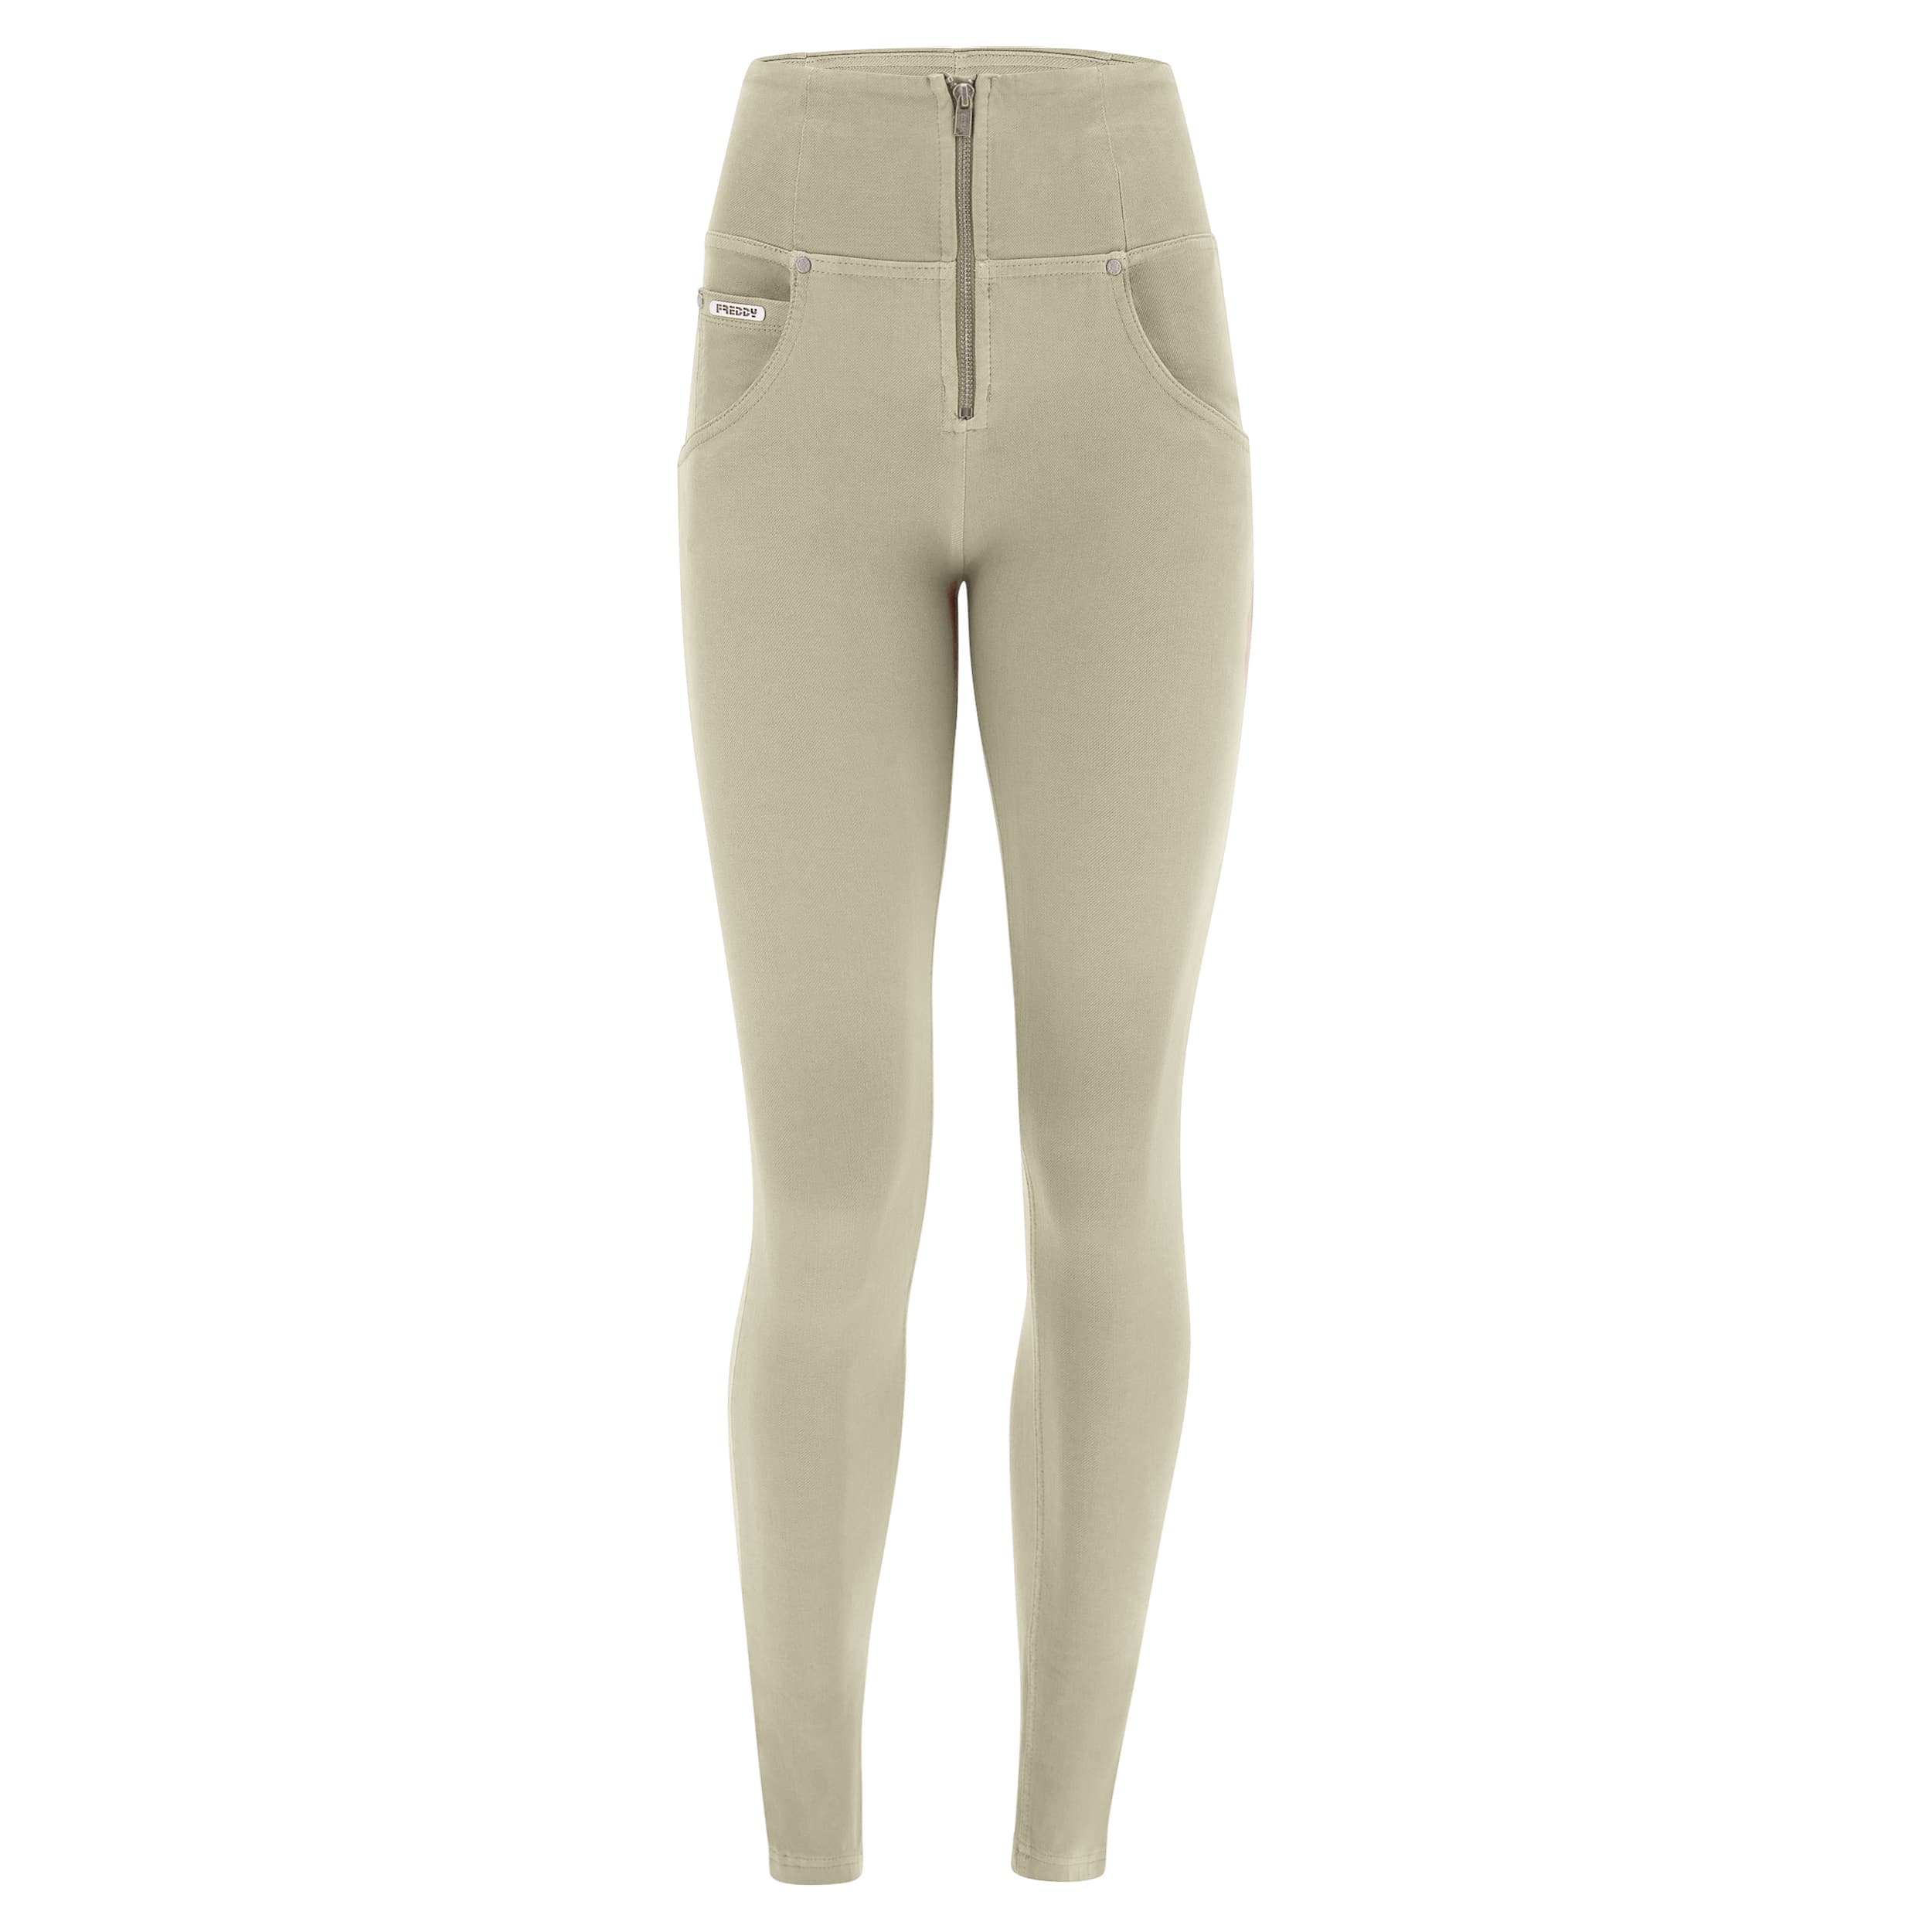 freddy jeans broek pants shaping shapewear push up high waist zipper rits fitting beige sand zandkleur colour